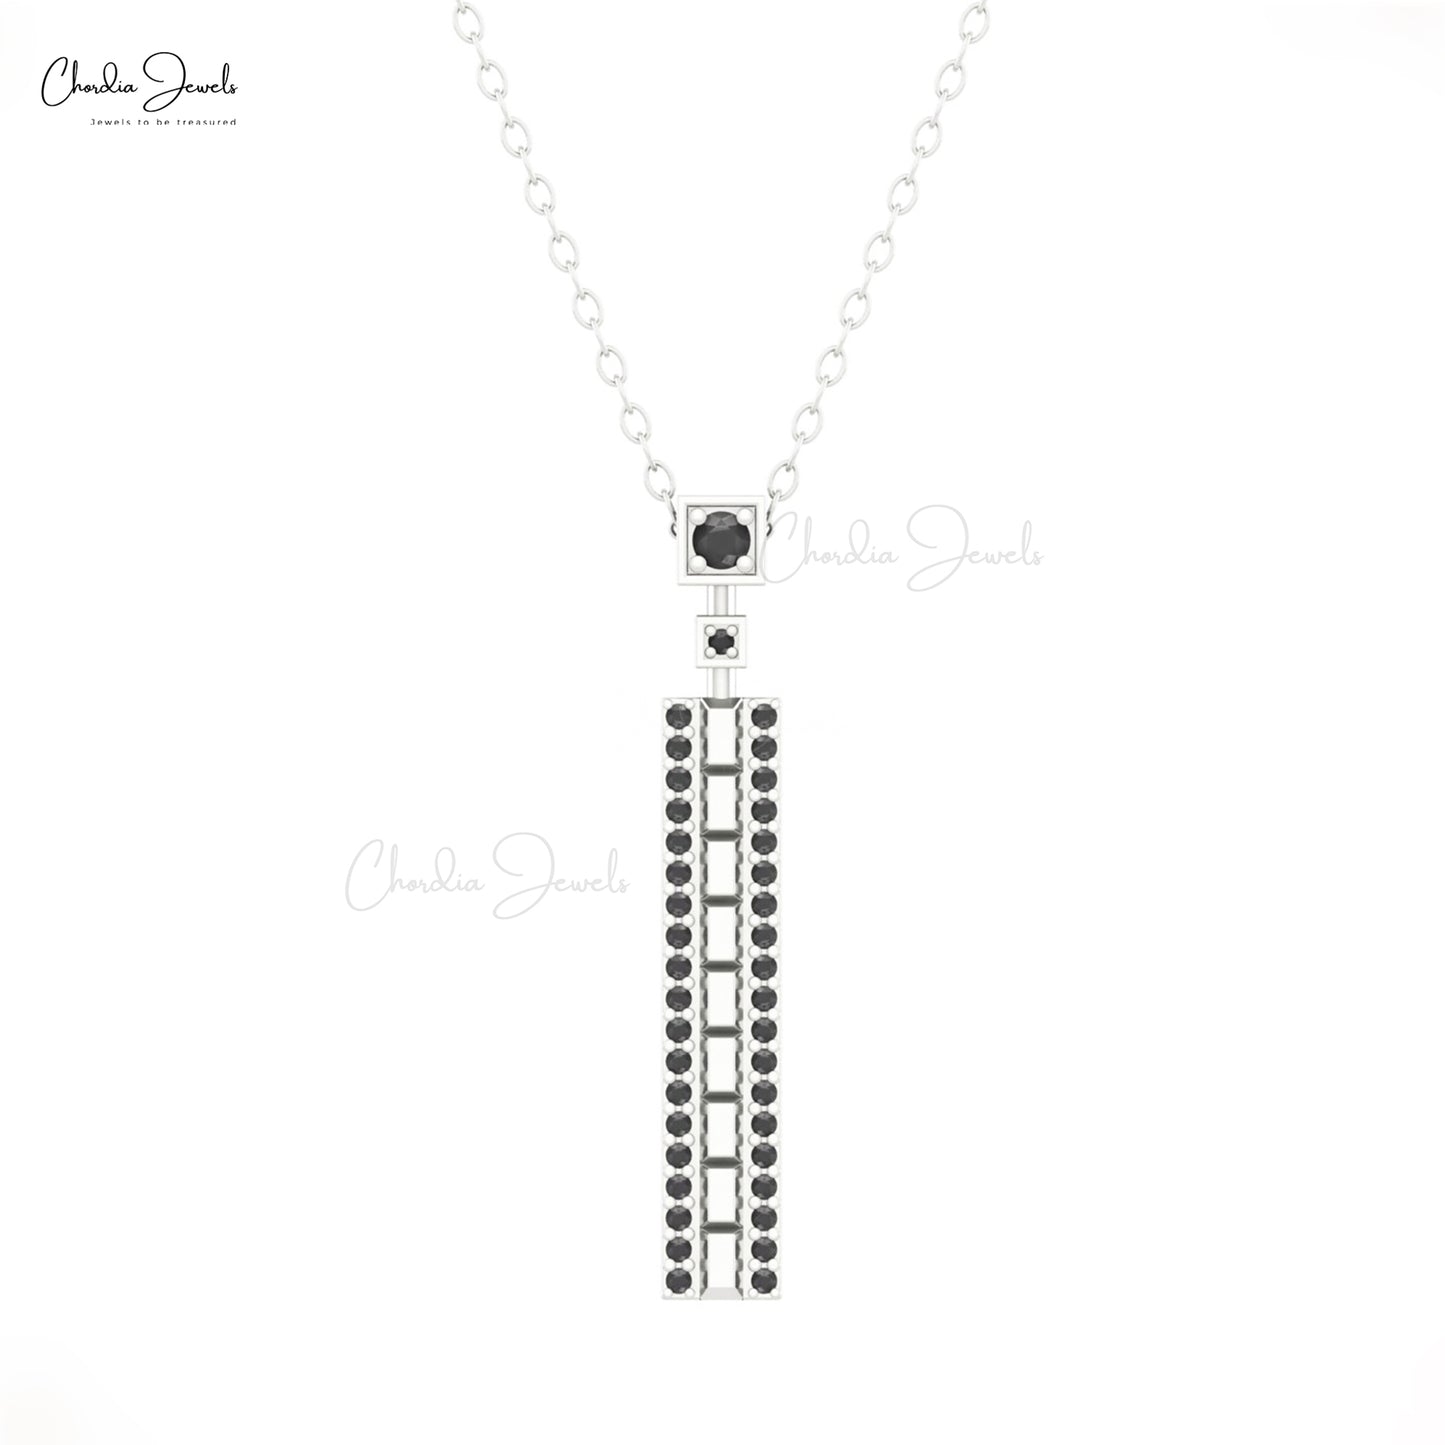 black diamond necklace